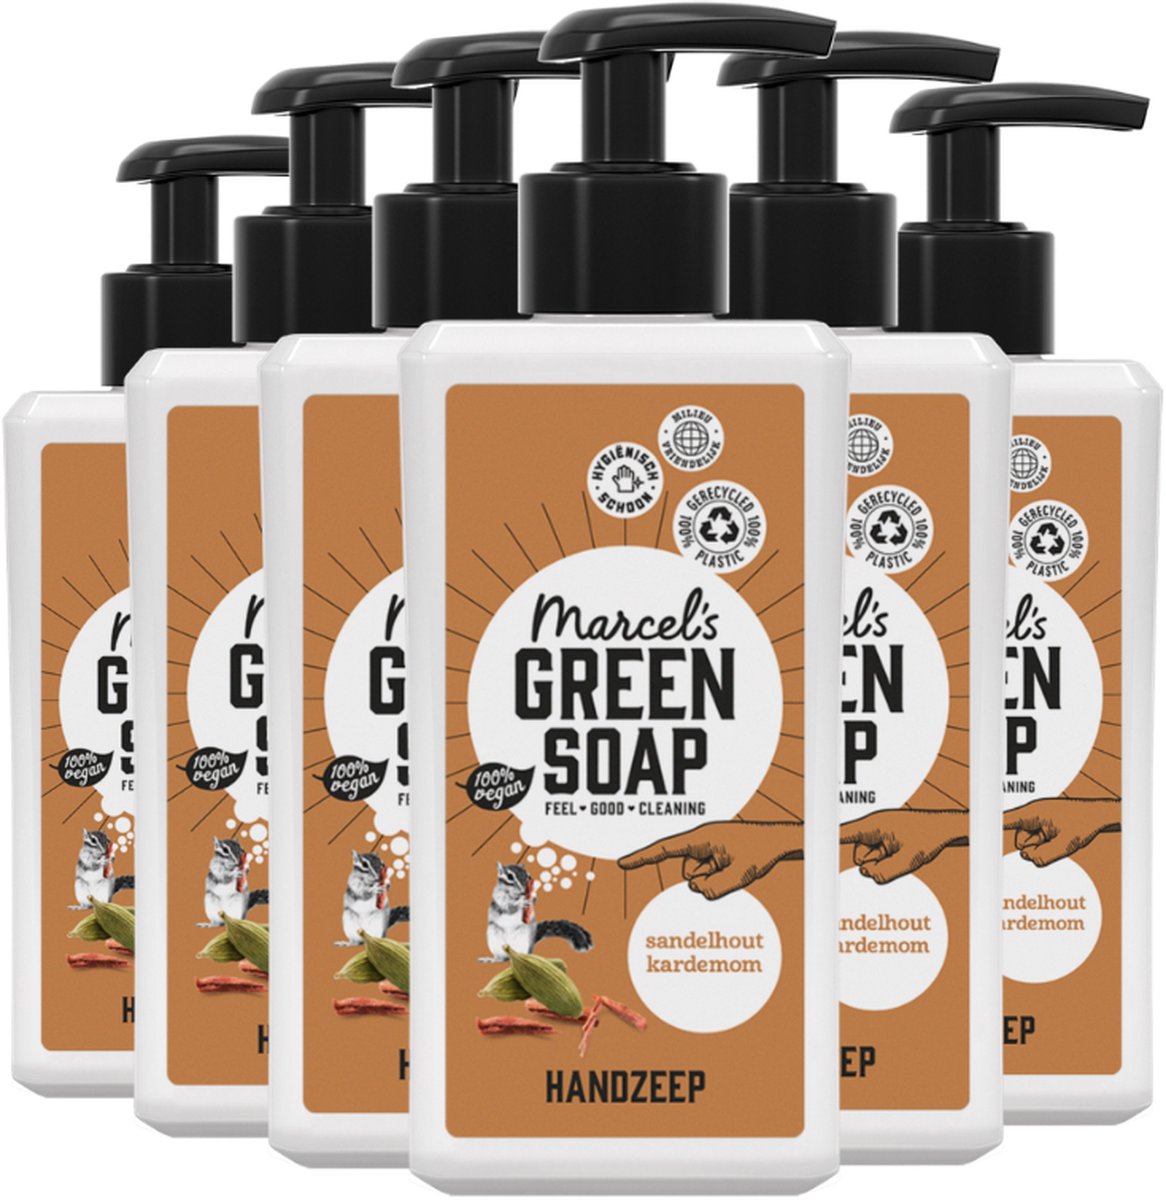 Marcel's Green Soap Handzeep Sandelhout & Kardemom - 6 x 250 ml | bol.com